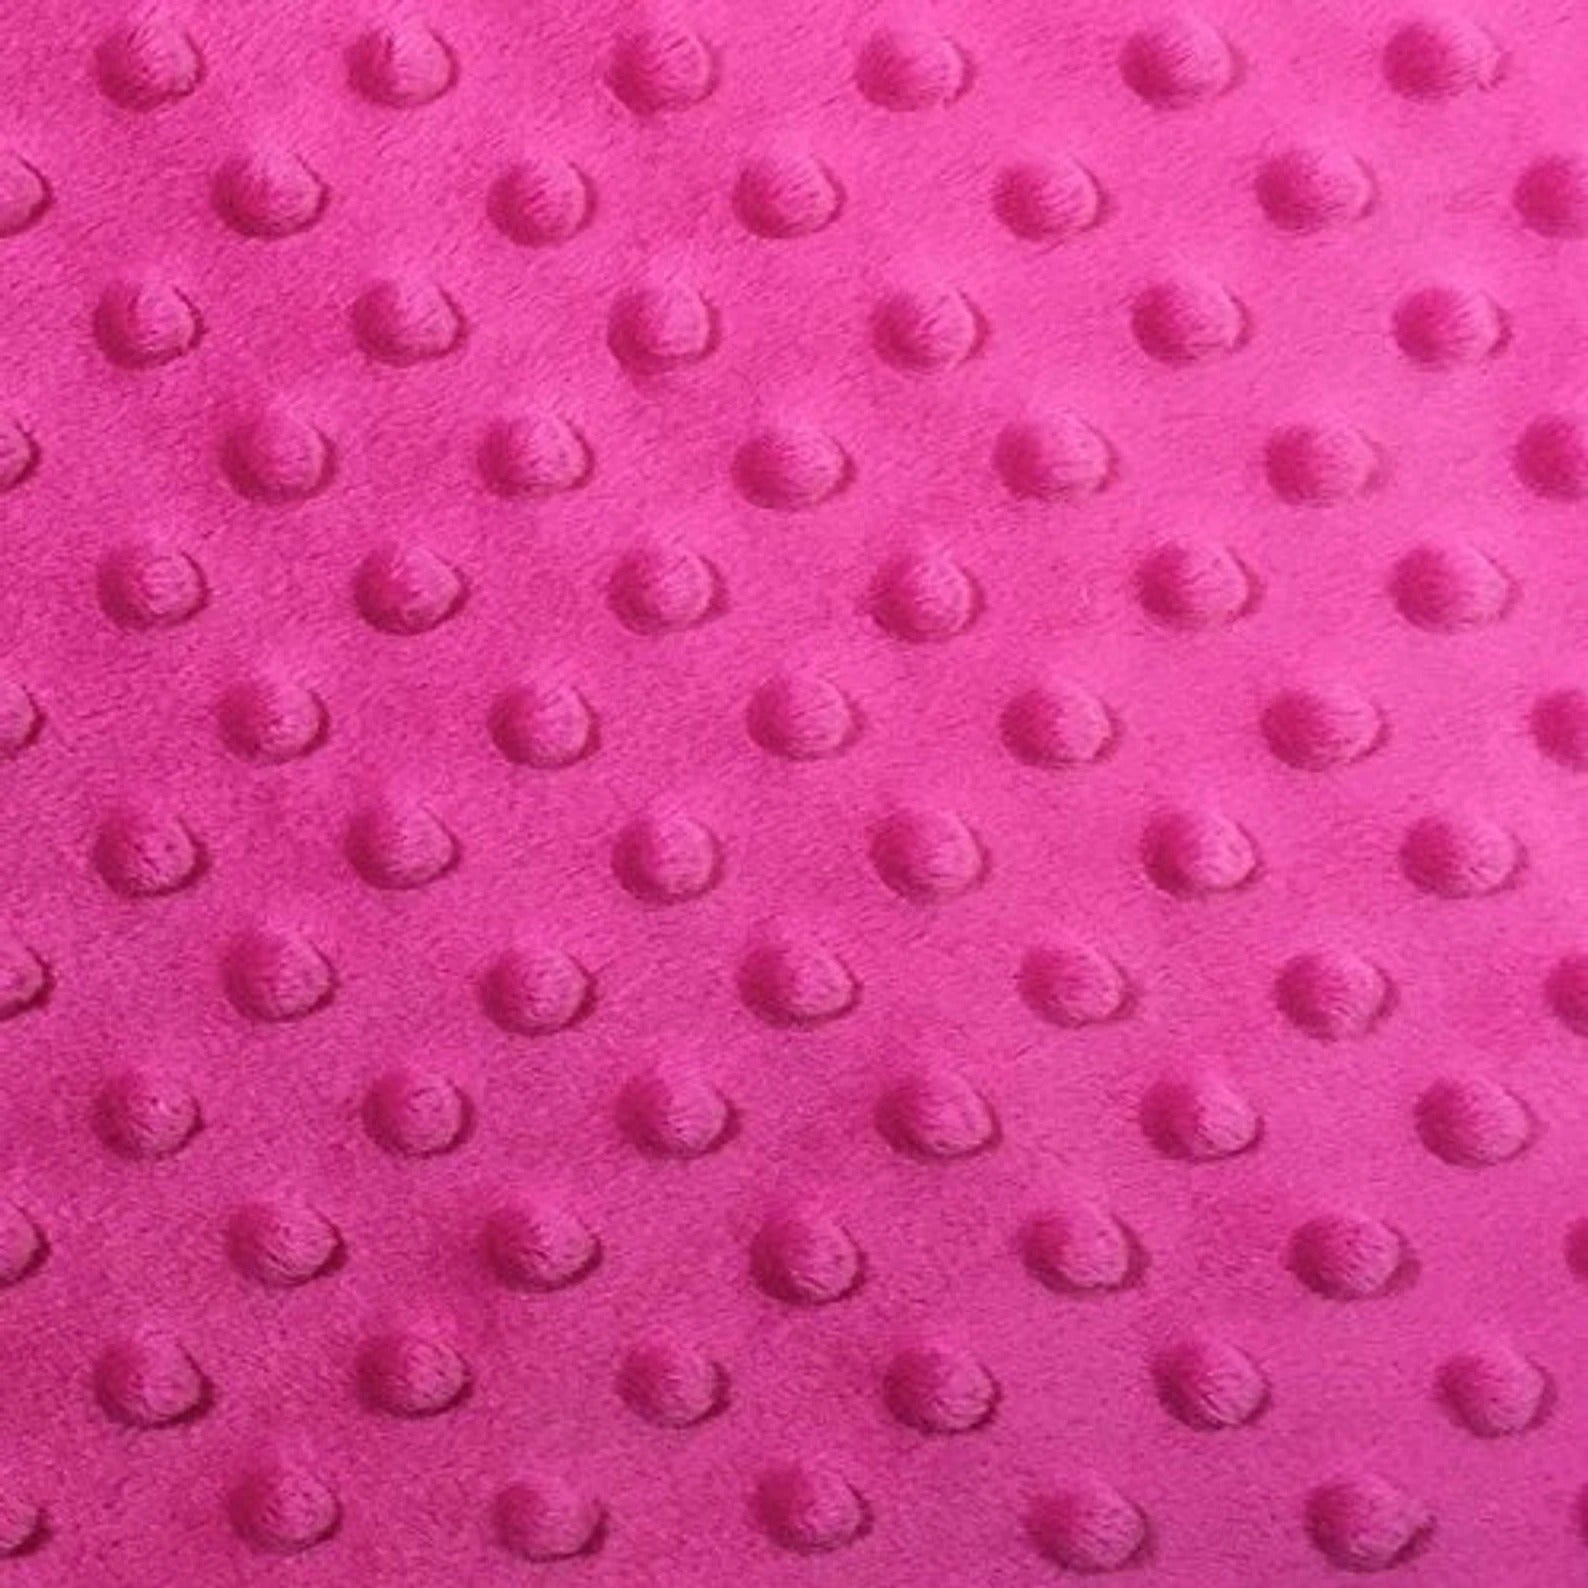 Bubble Polka Dot Minky Fabric By The Roll (20 Yards) Wholesale FabricMinkyICEFABRICICE FABRICSHot PinkBy The Roll (60" Wide)Bubble Polka Dot Minky Fabric By The Roll (20 Yards) Wholesale Fabric ICEFABRIC Hot Pink